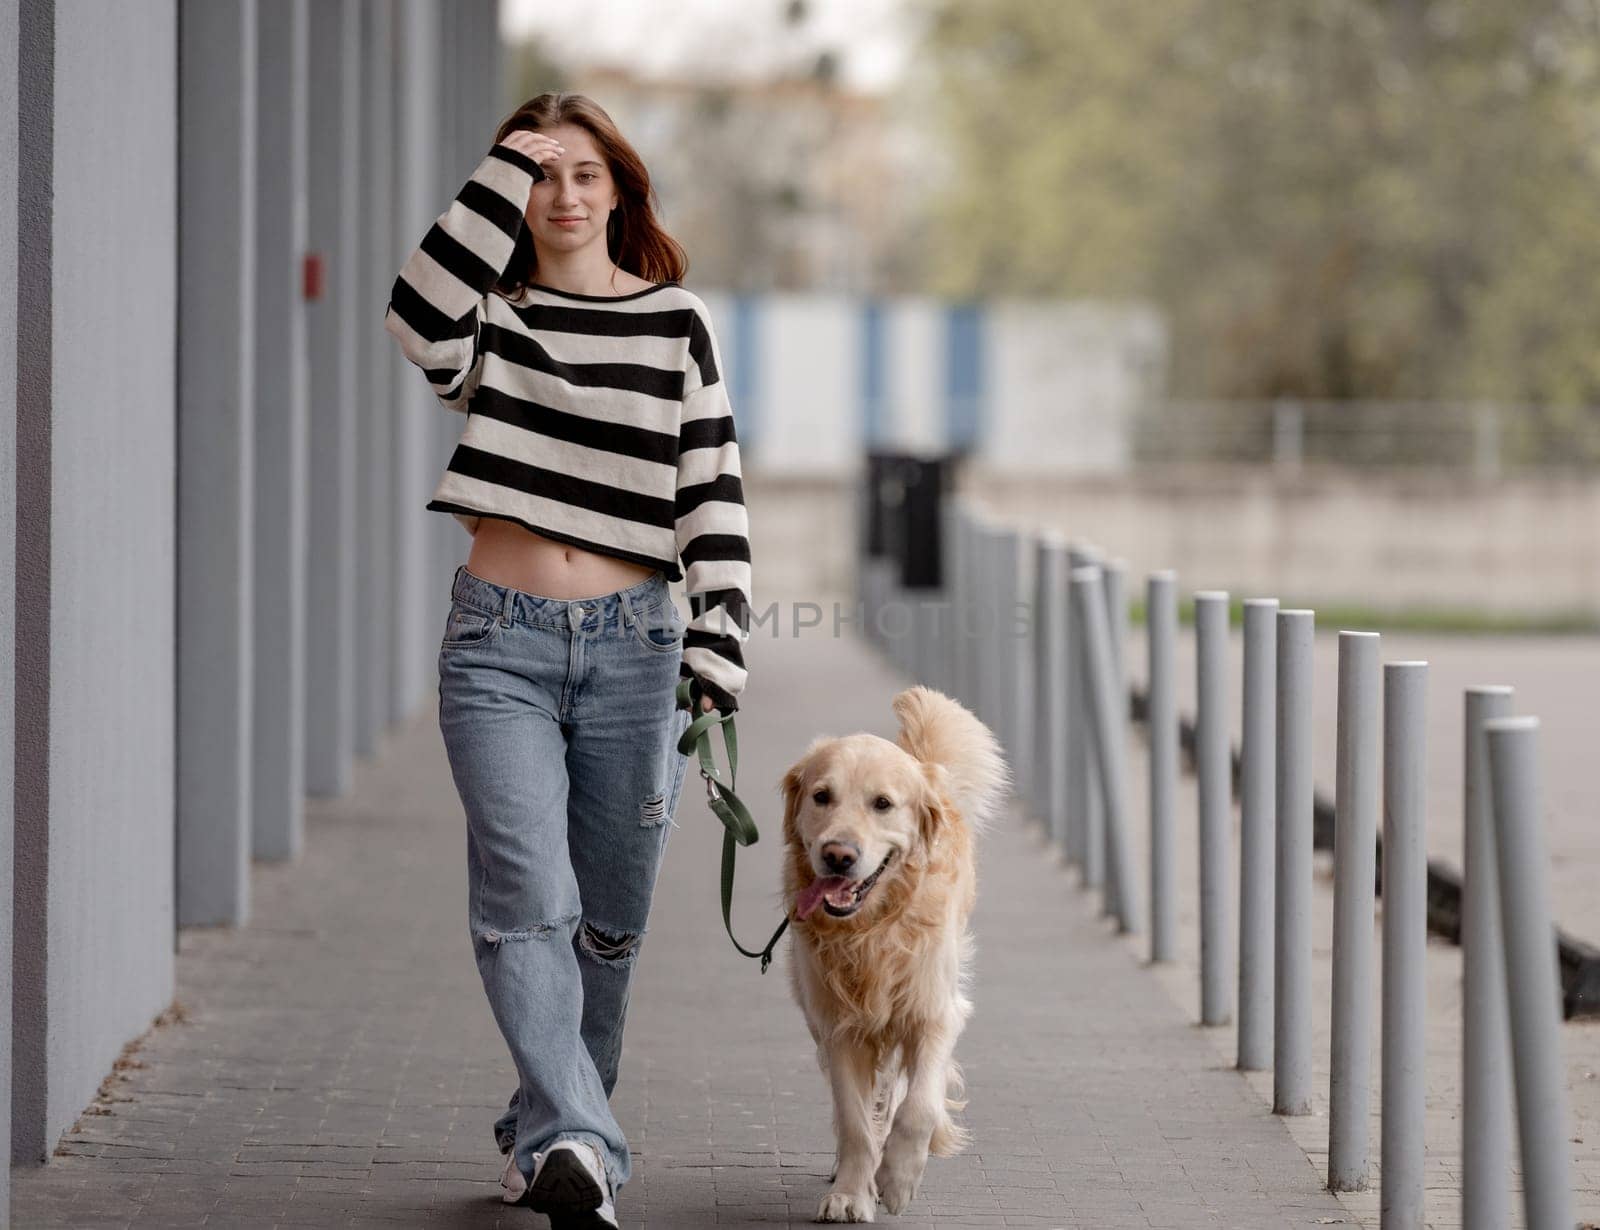 Teen Girl Walking With Golden Retriever In City by tan4ikk1